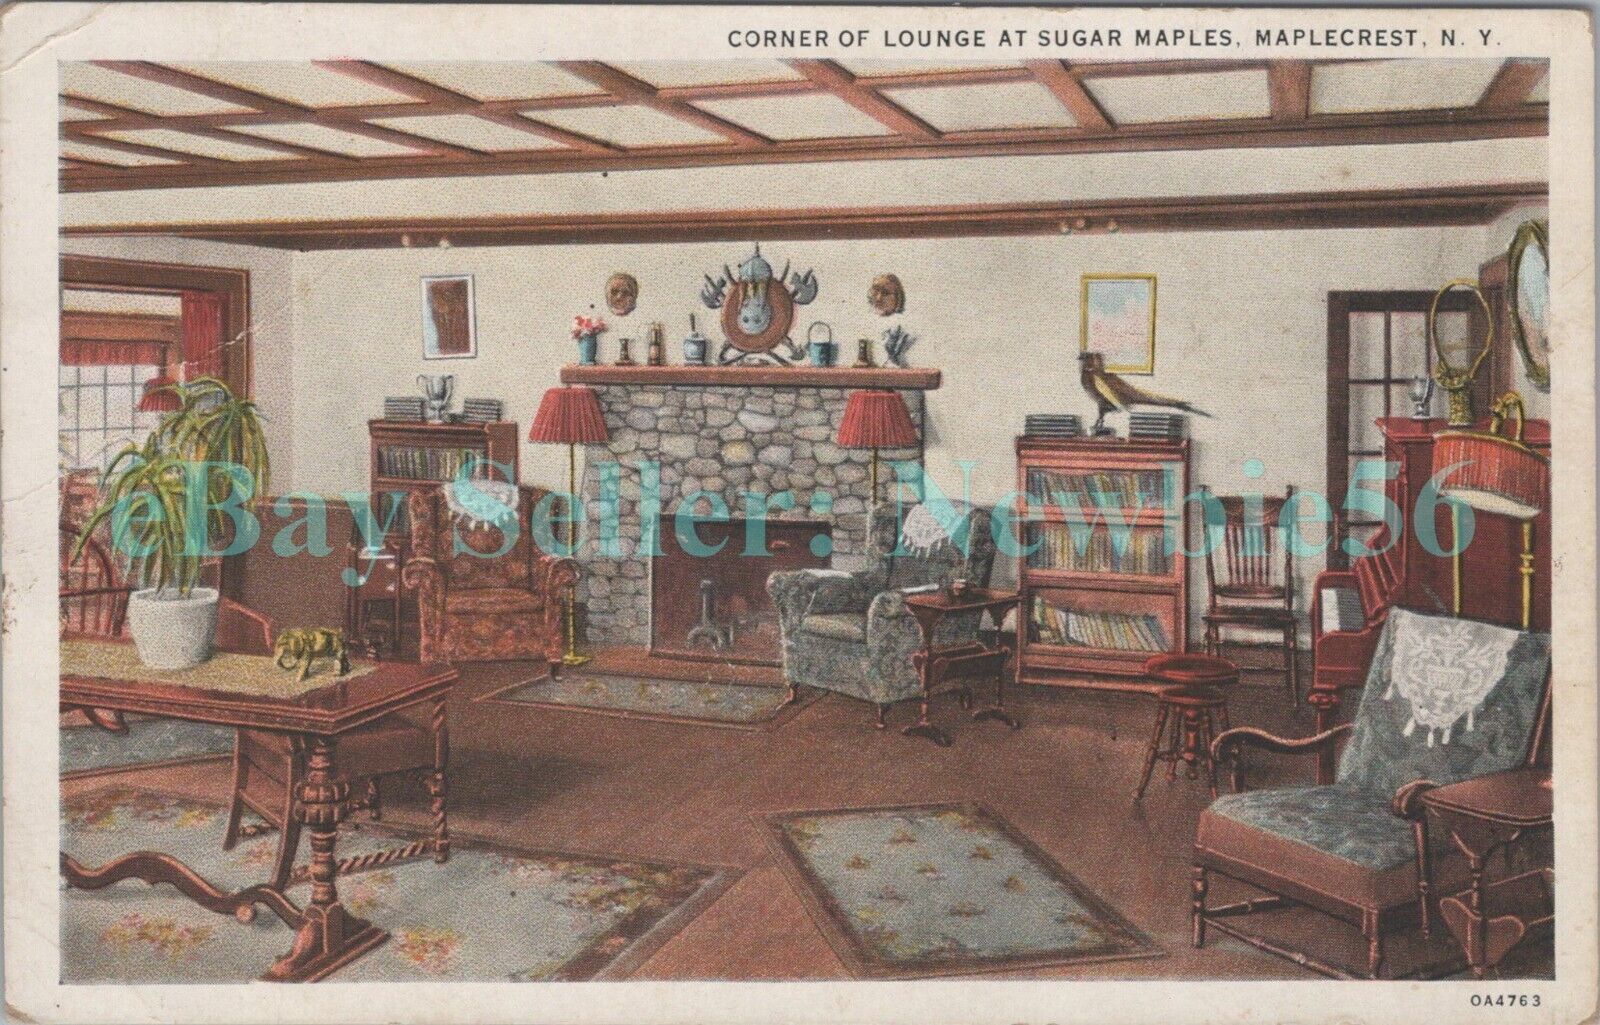 Maplecrest NY - INTERIOR LOUNGE AT SUGAR MAPLES HOTEL - c1920s Postcard Windham